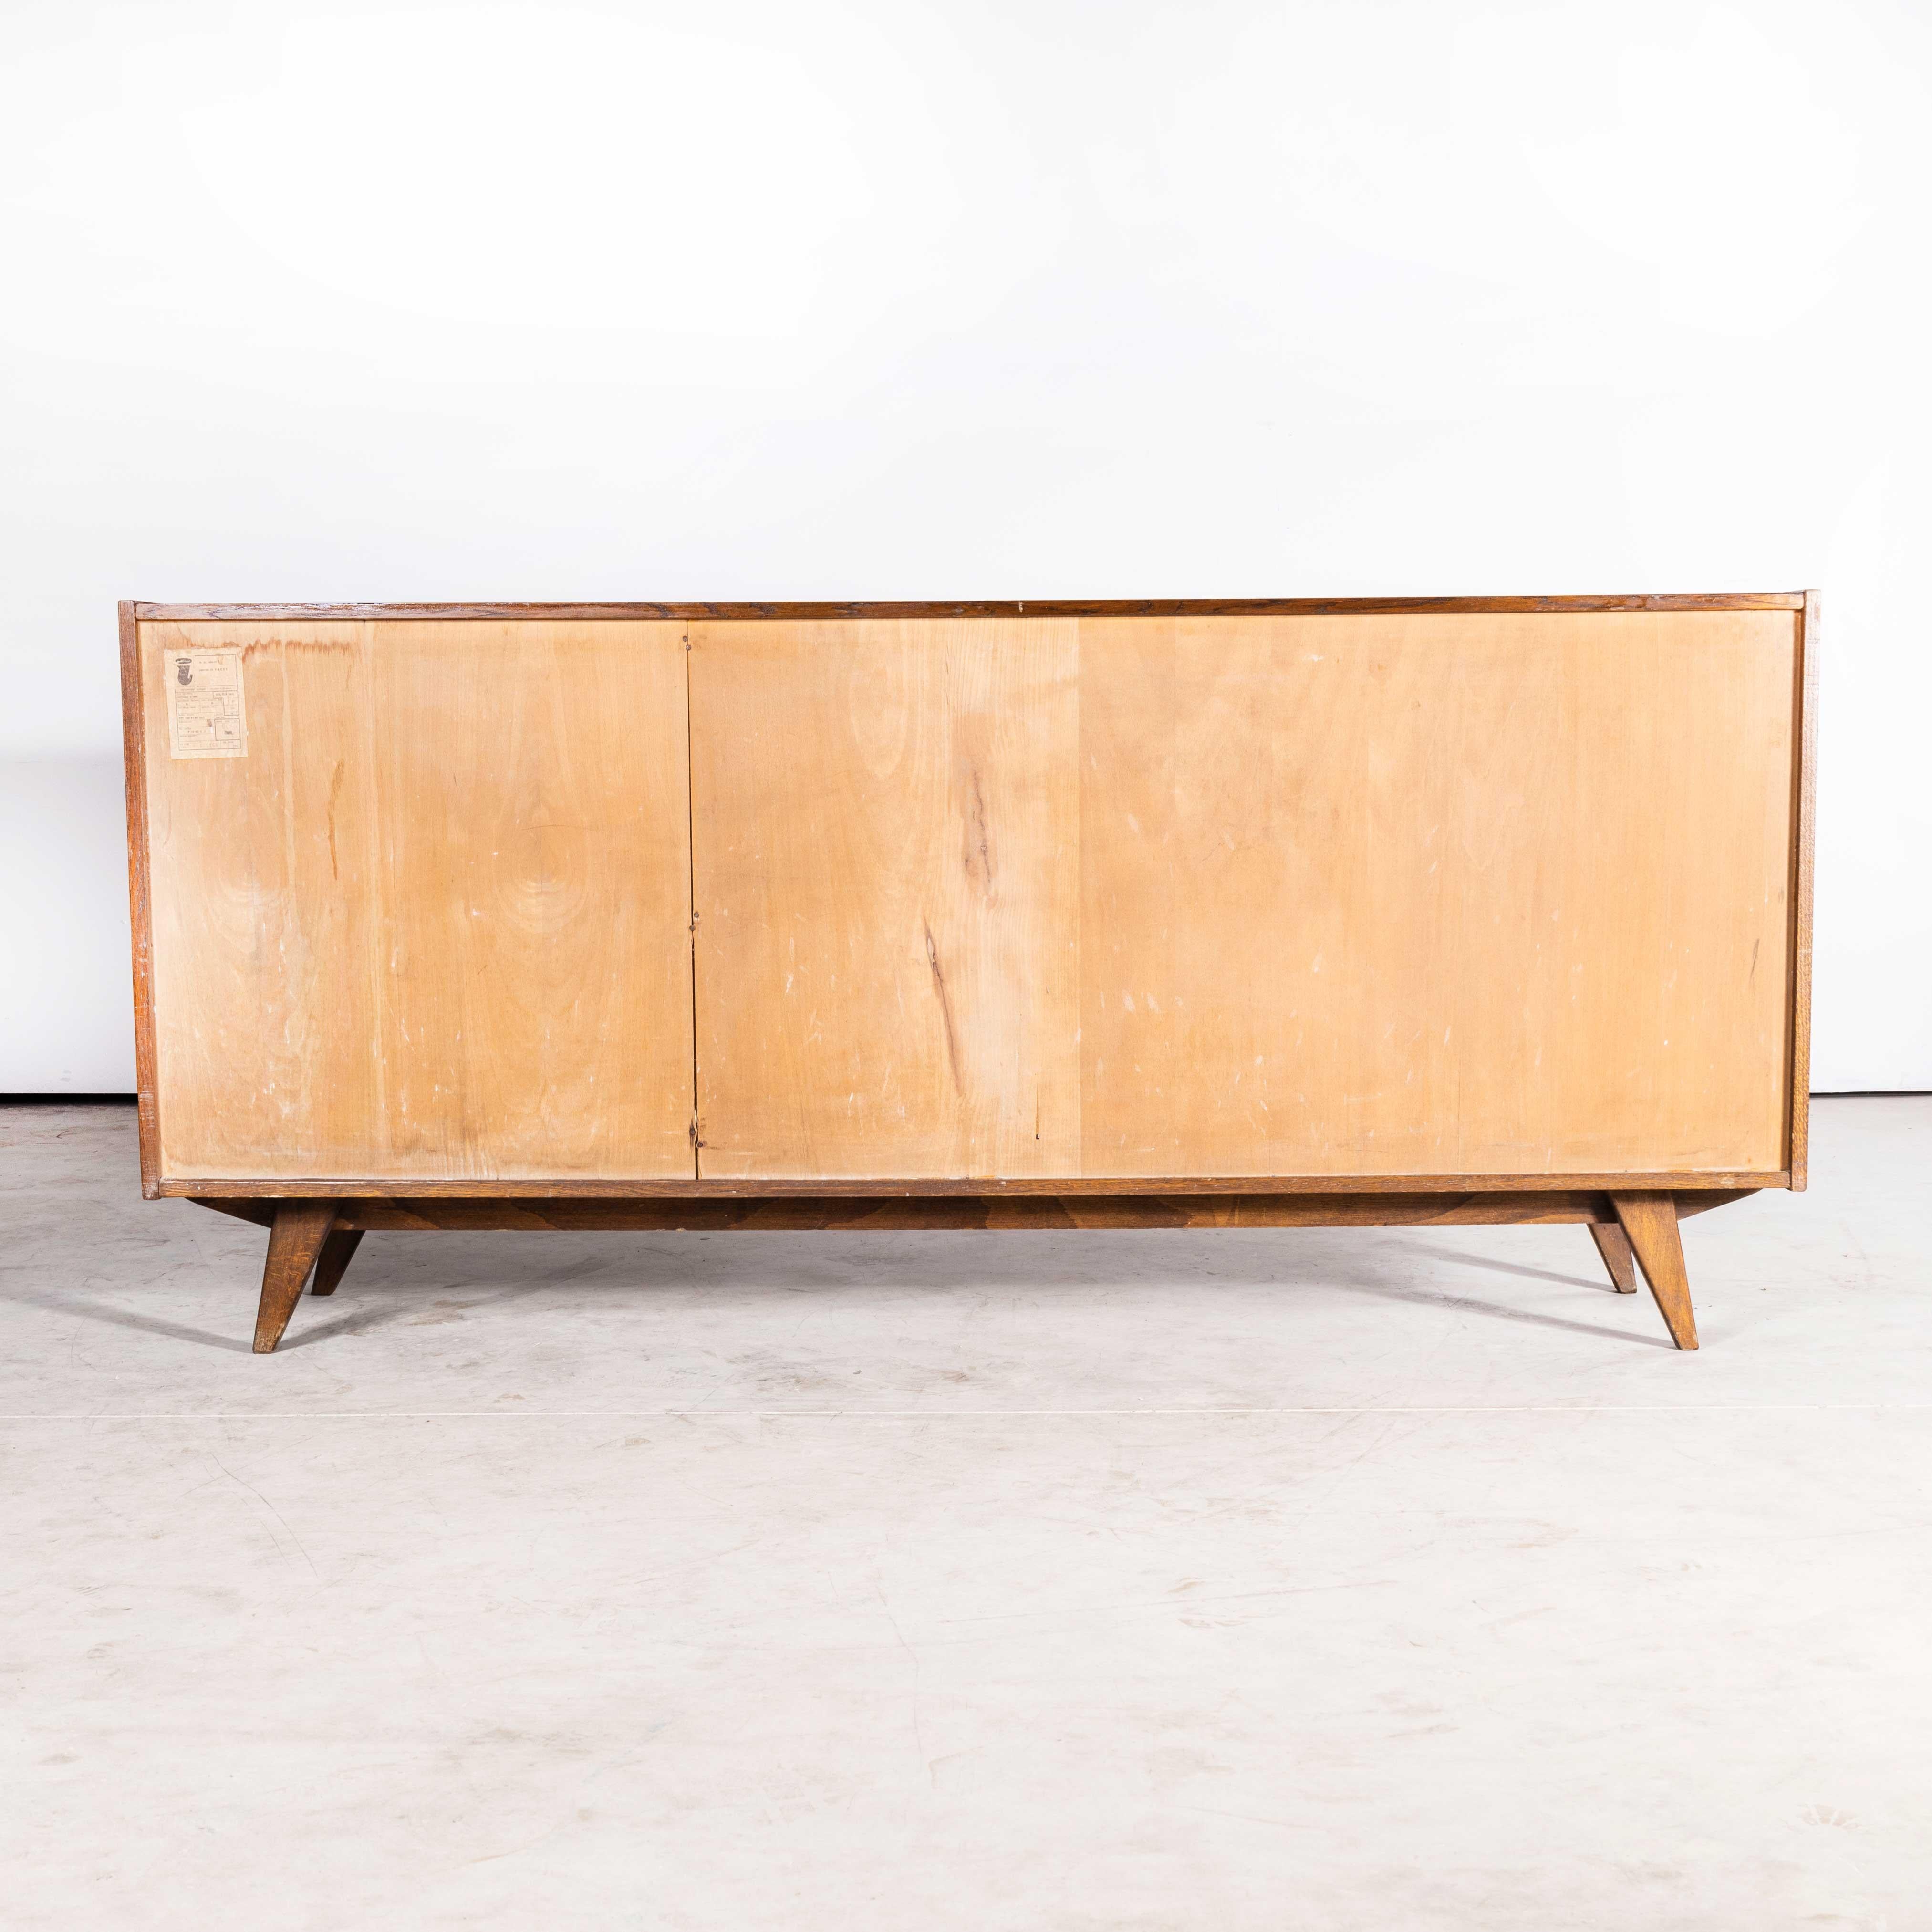 1950s Large Walnut Cabinet, Sideboard by Jiri Jiroutek for Interieur Praha For Sale 1